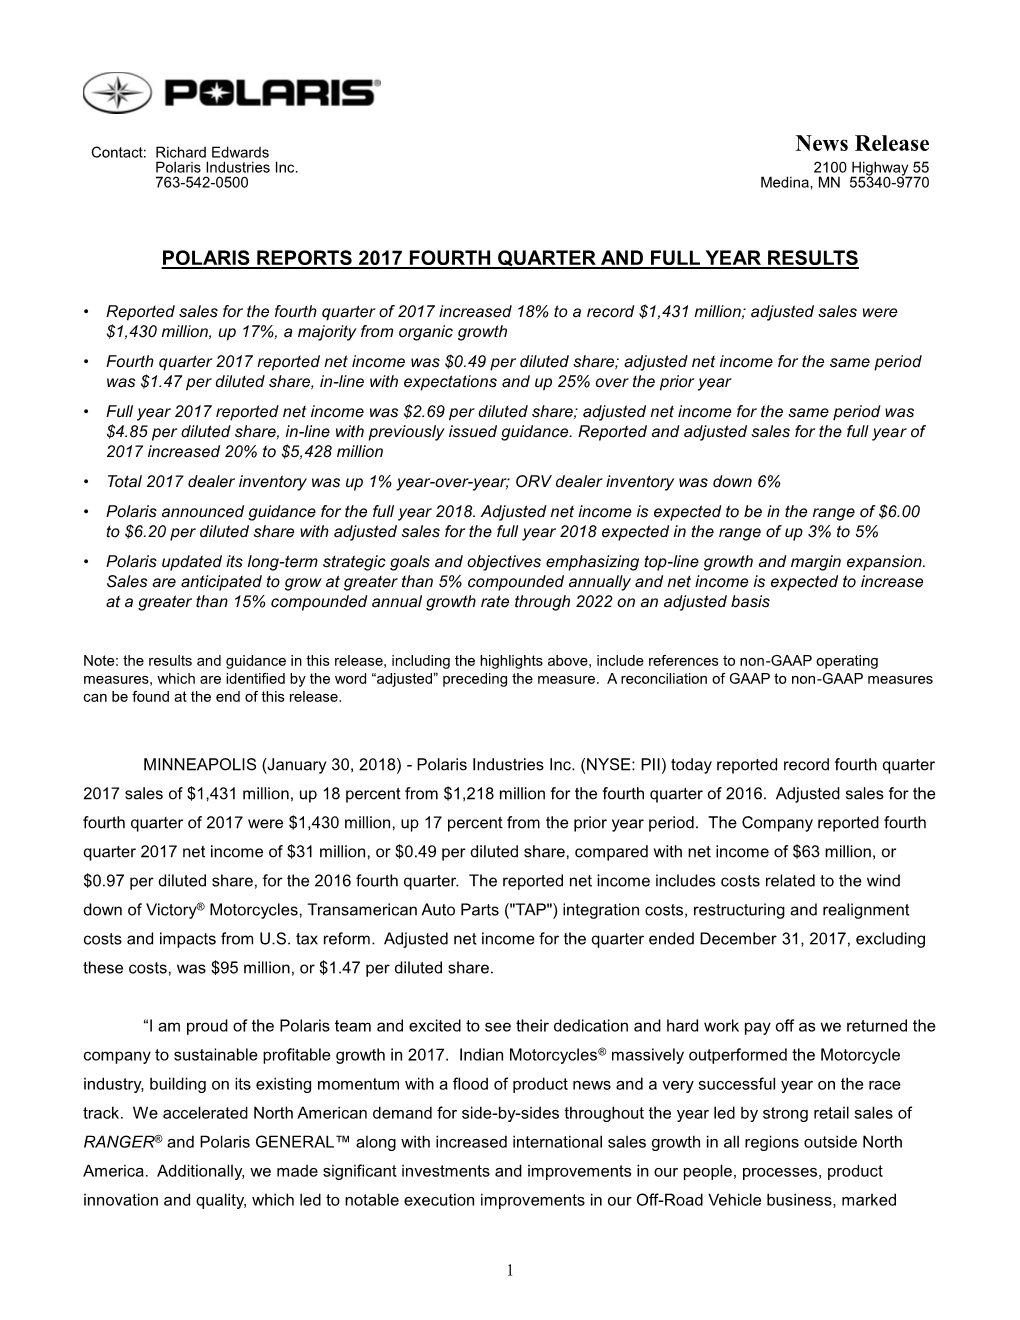 News Release Polaris Industries Inc